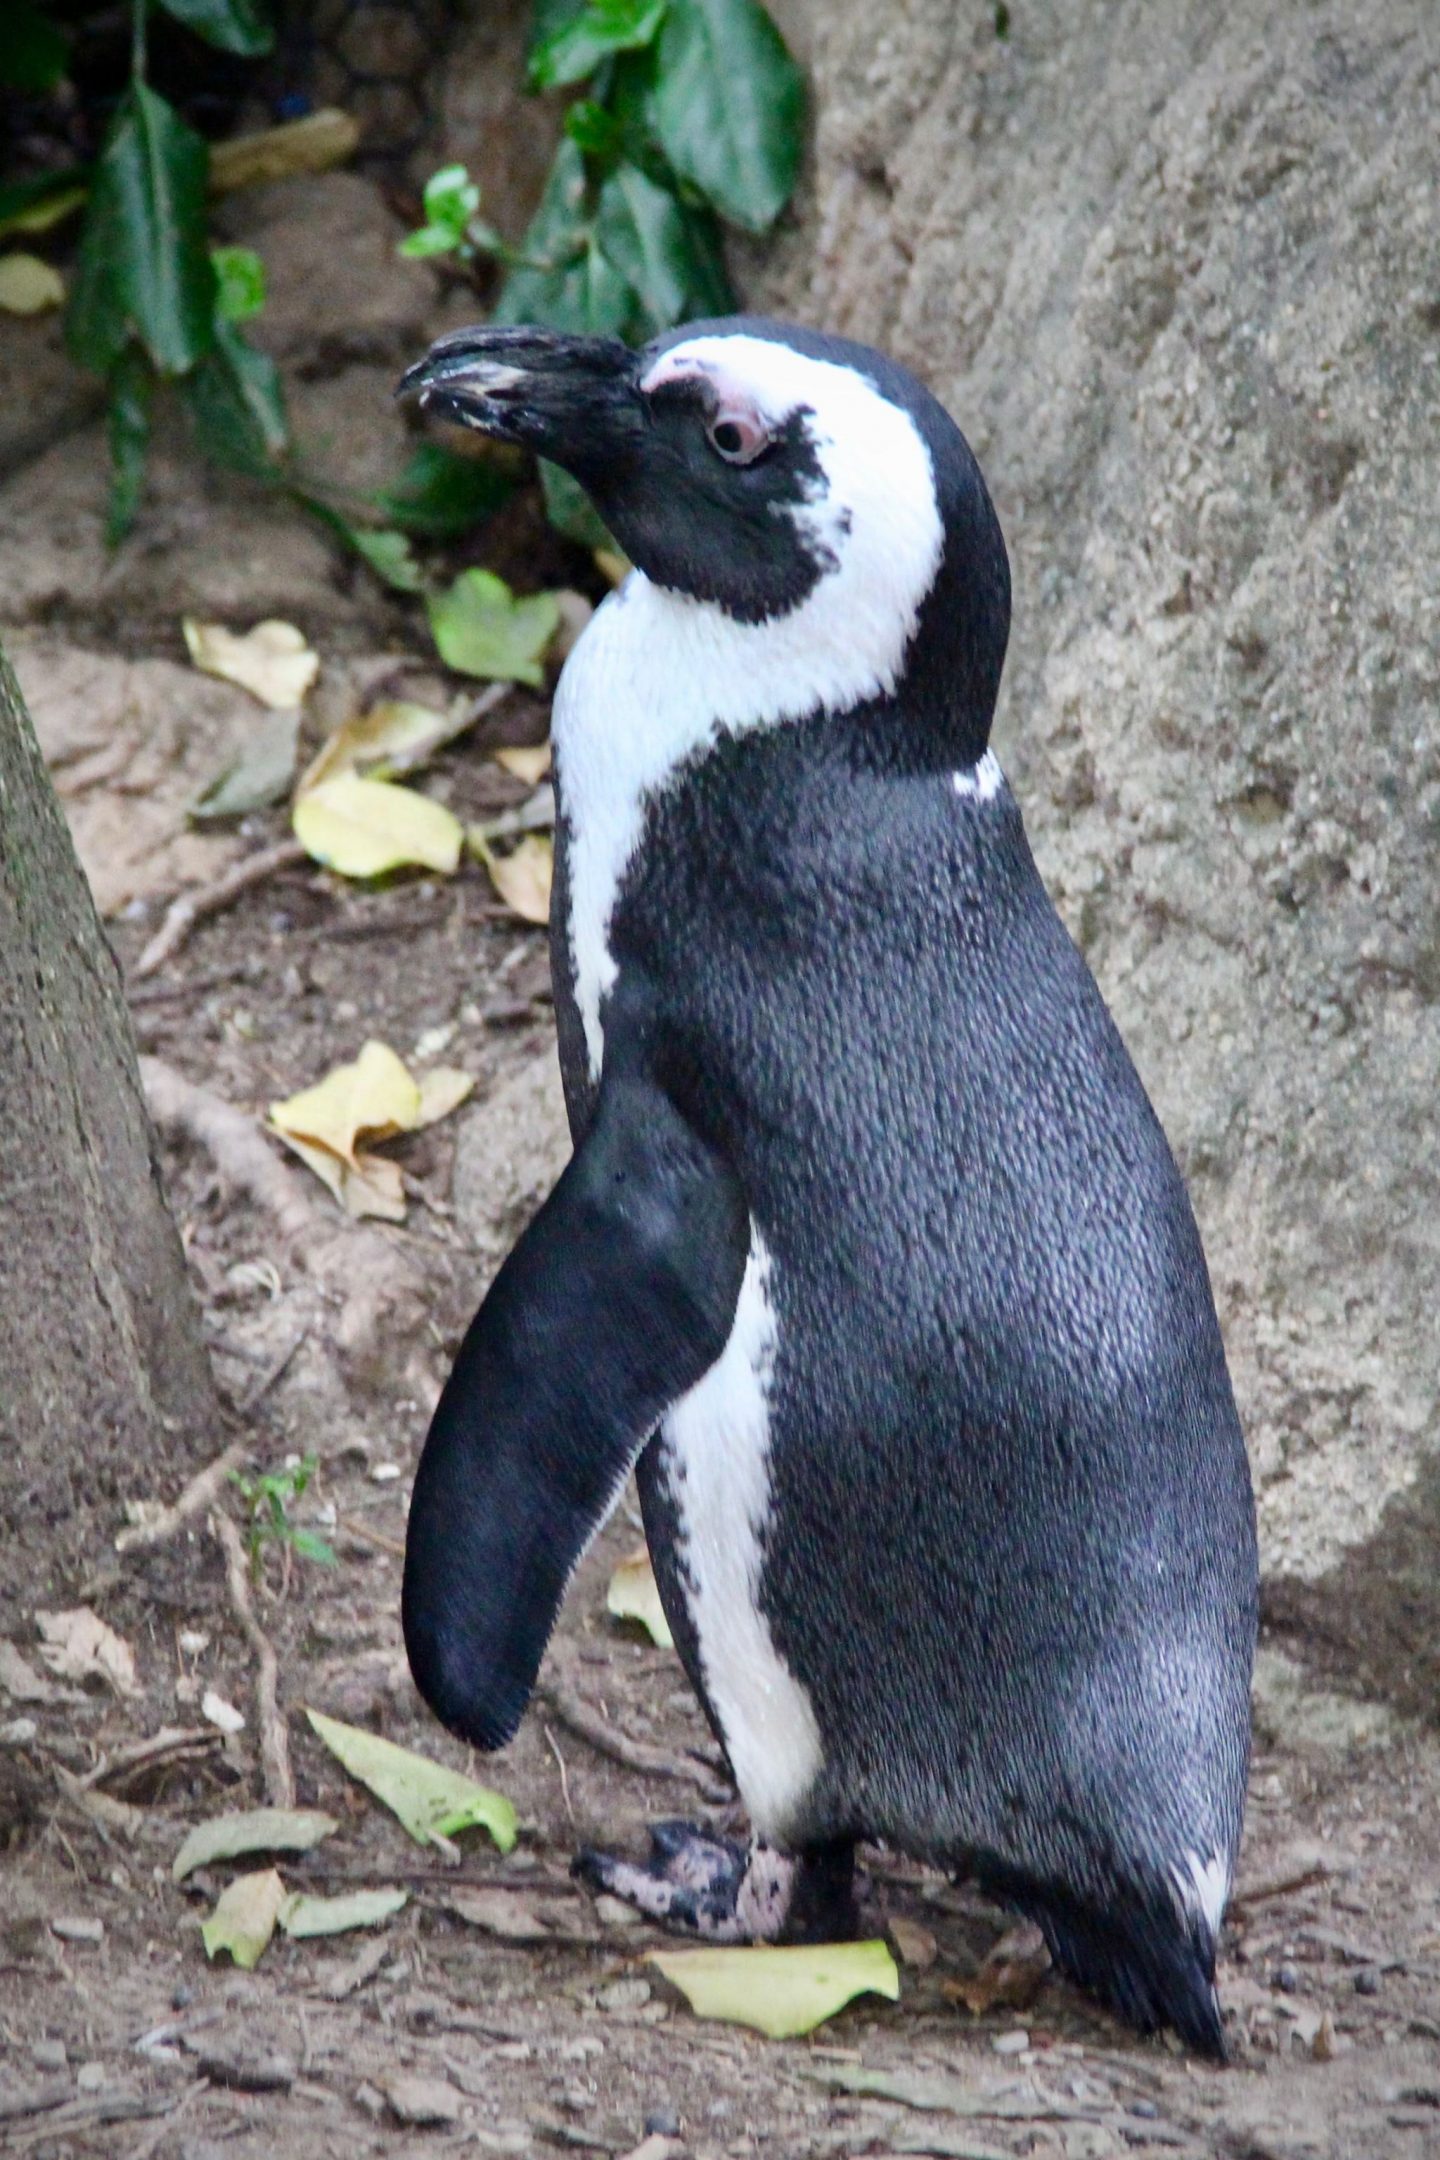 Penguin at the Cincinnati Zoo ... The Spectacular Adventurer